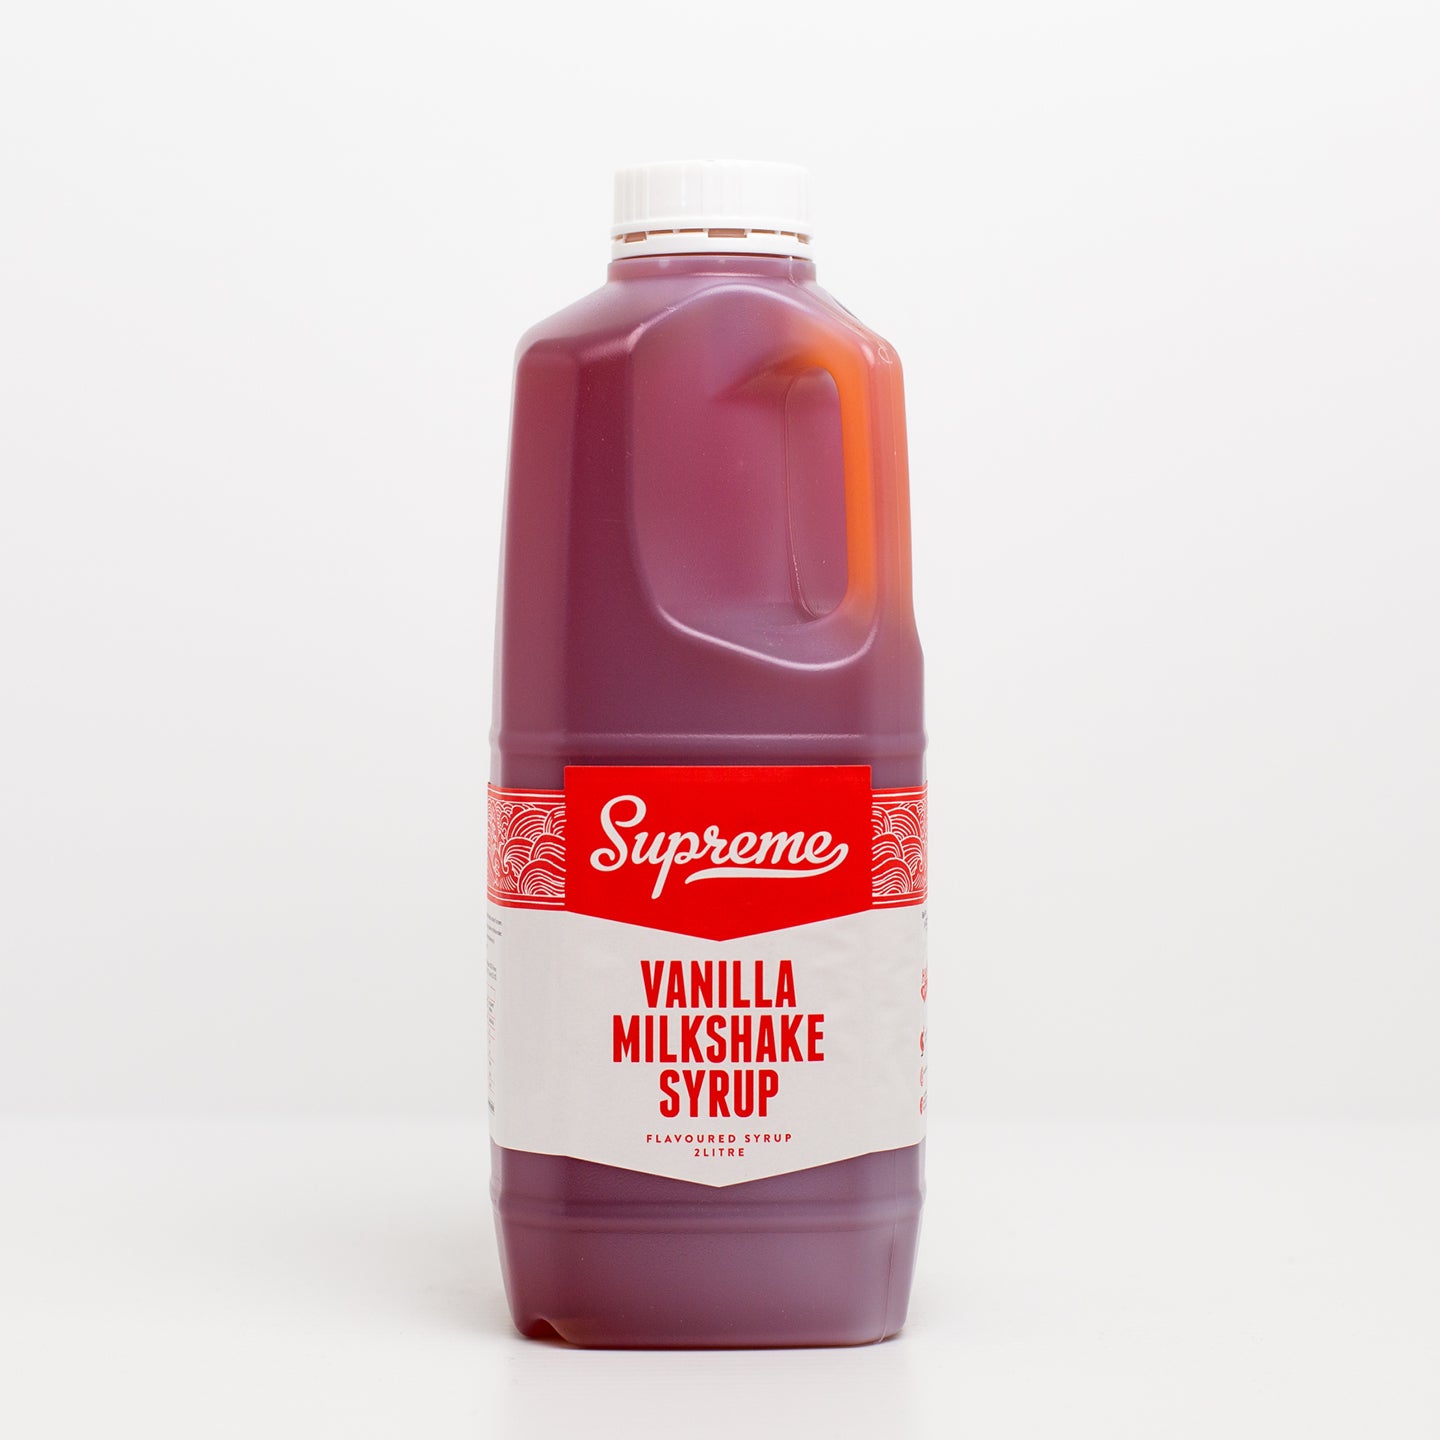 Supreme Milkshake Syrup 2L VANILLA